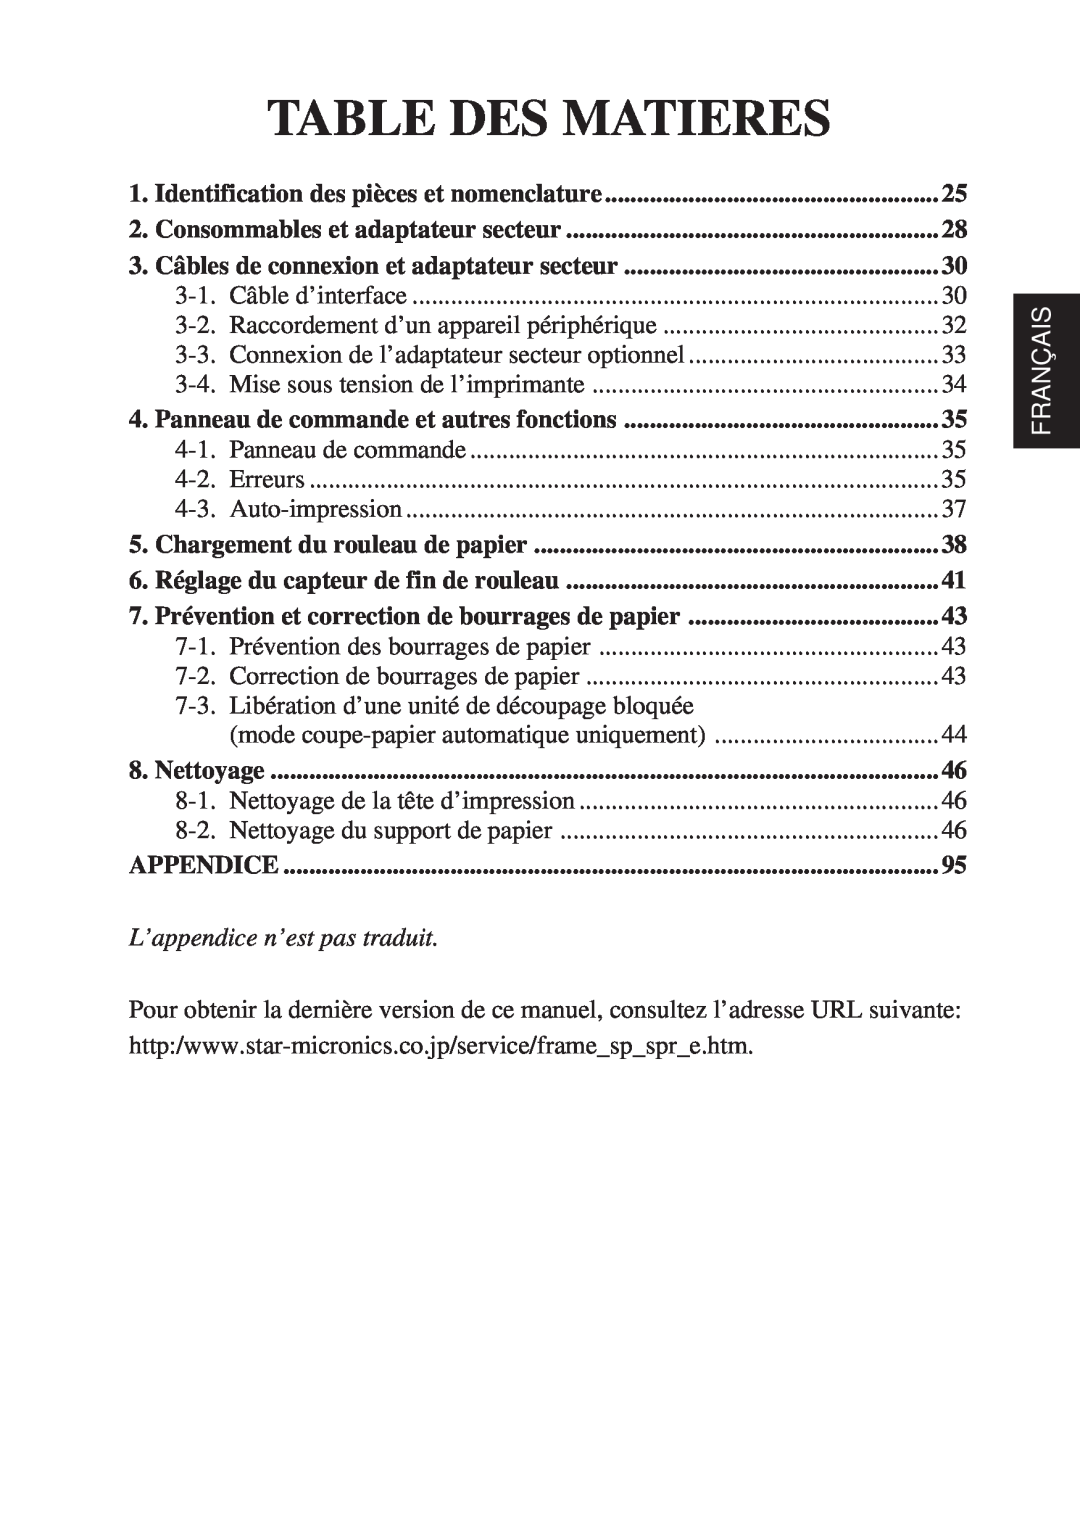 Star Micronics TSP600 user manual Table Des Matieres, Français 